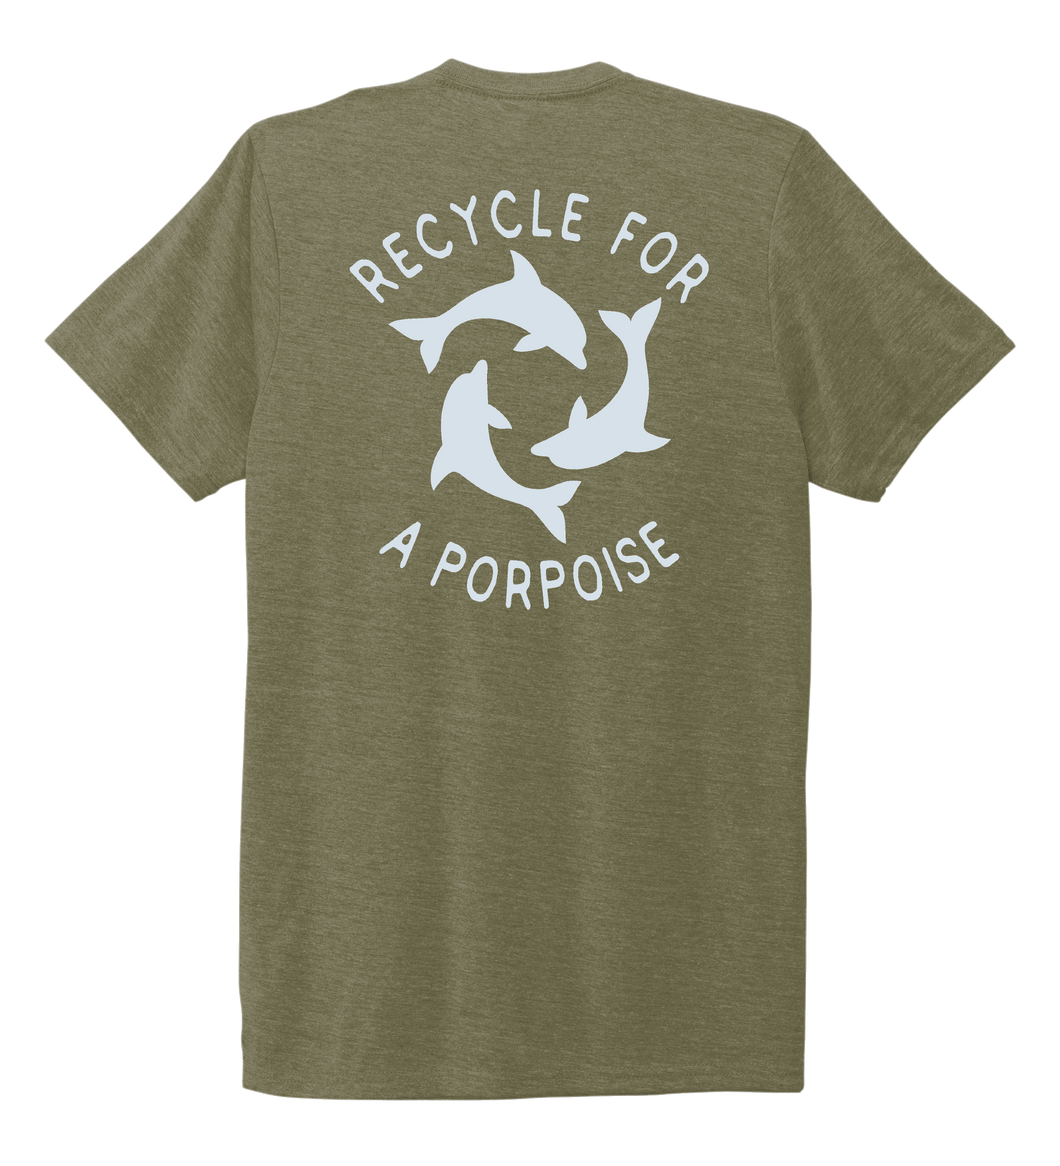 StepChange, Porpoise, Unisex Crew Neck T-shirt in Earthy Green